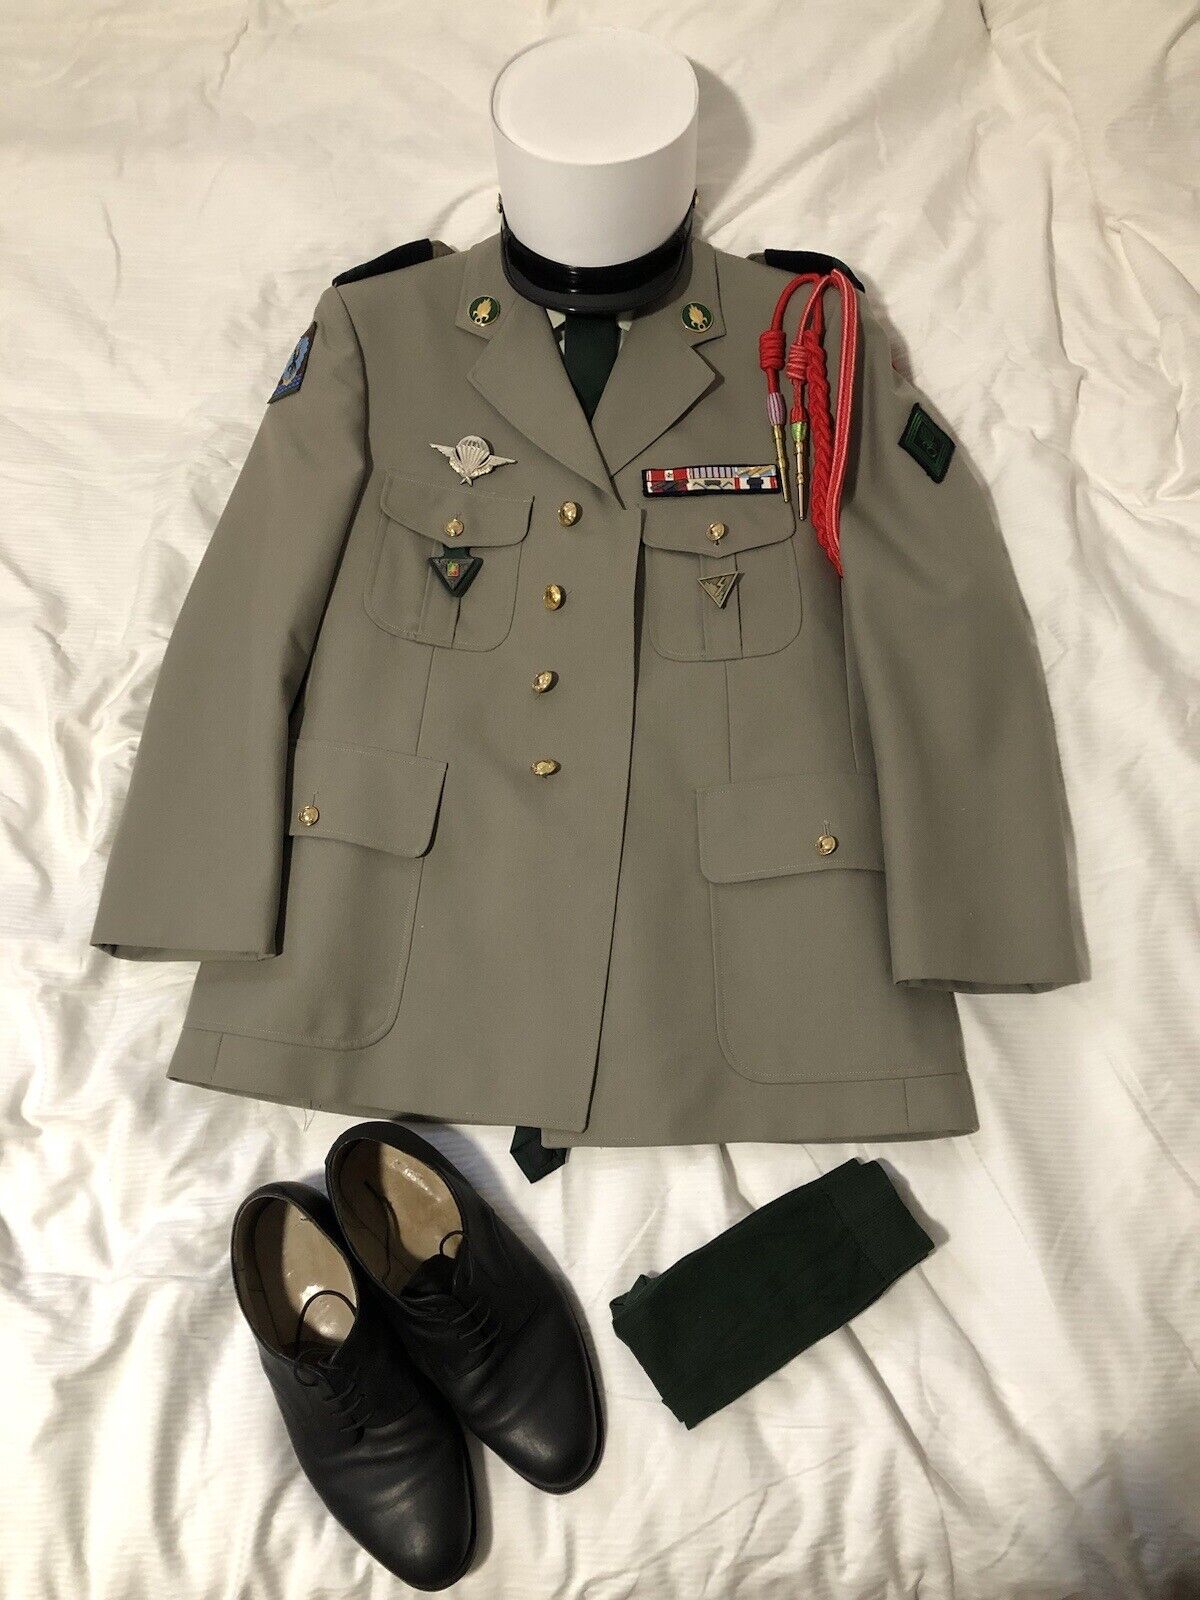 2 REP Foreign Legion Outfit Uniform